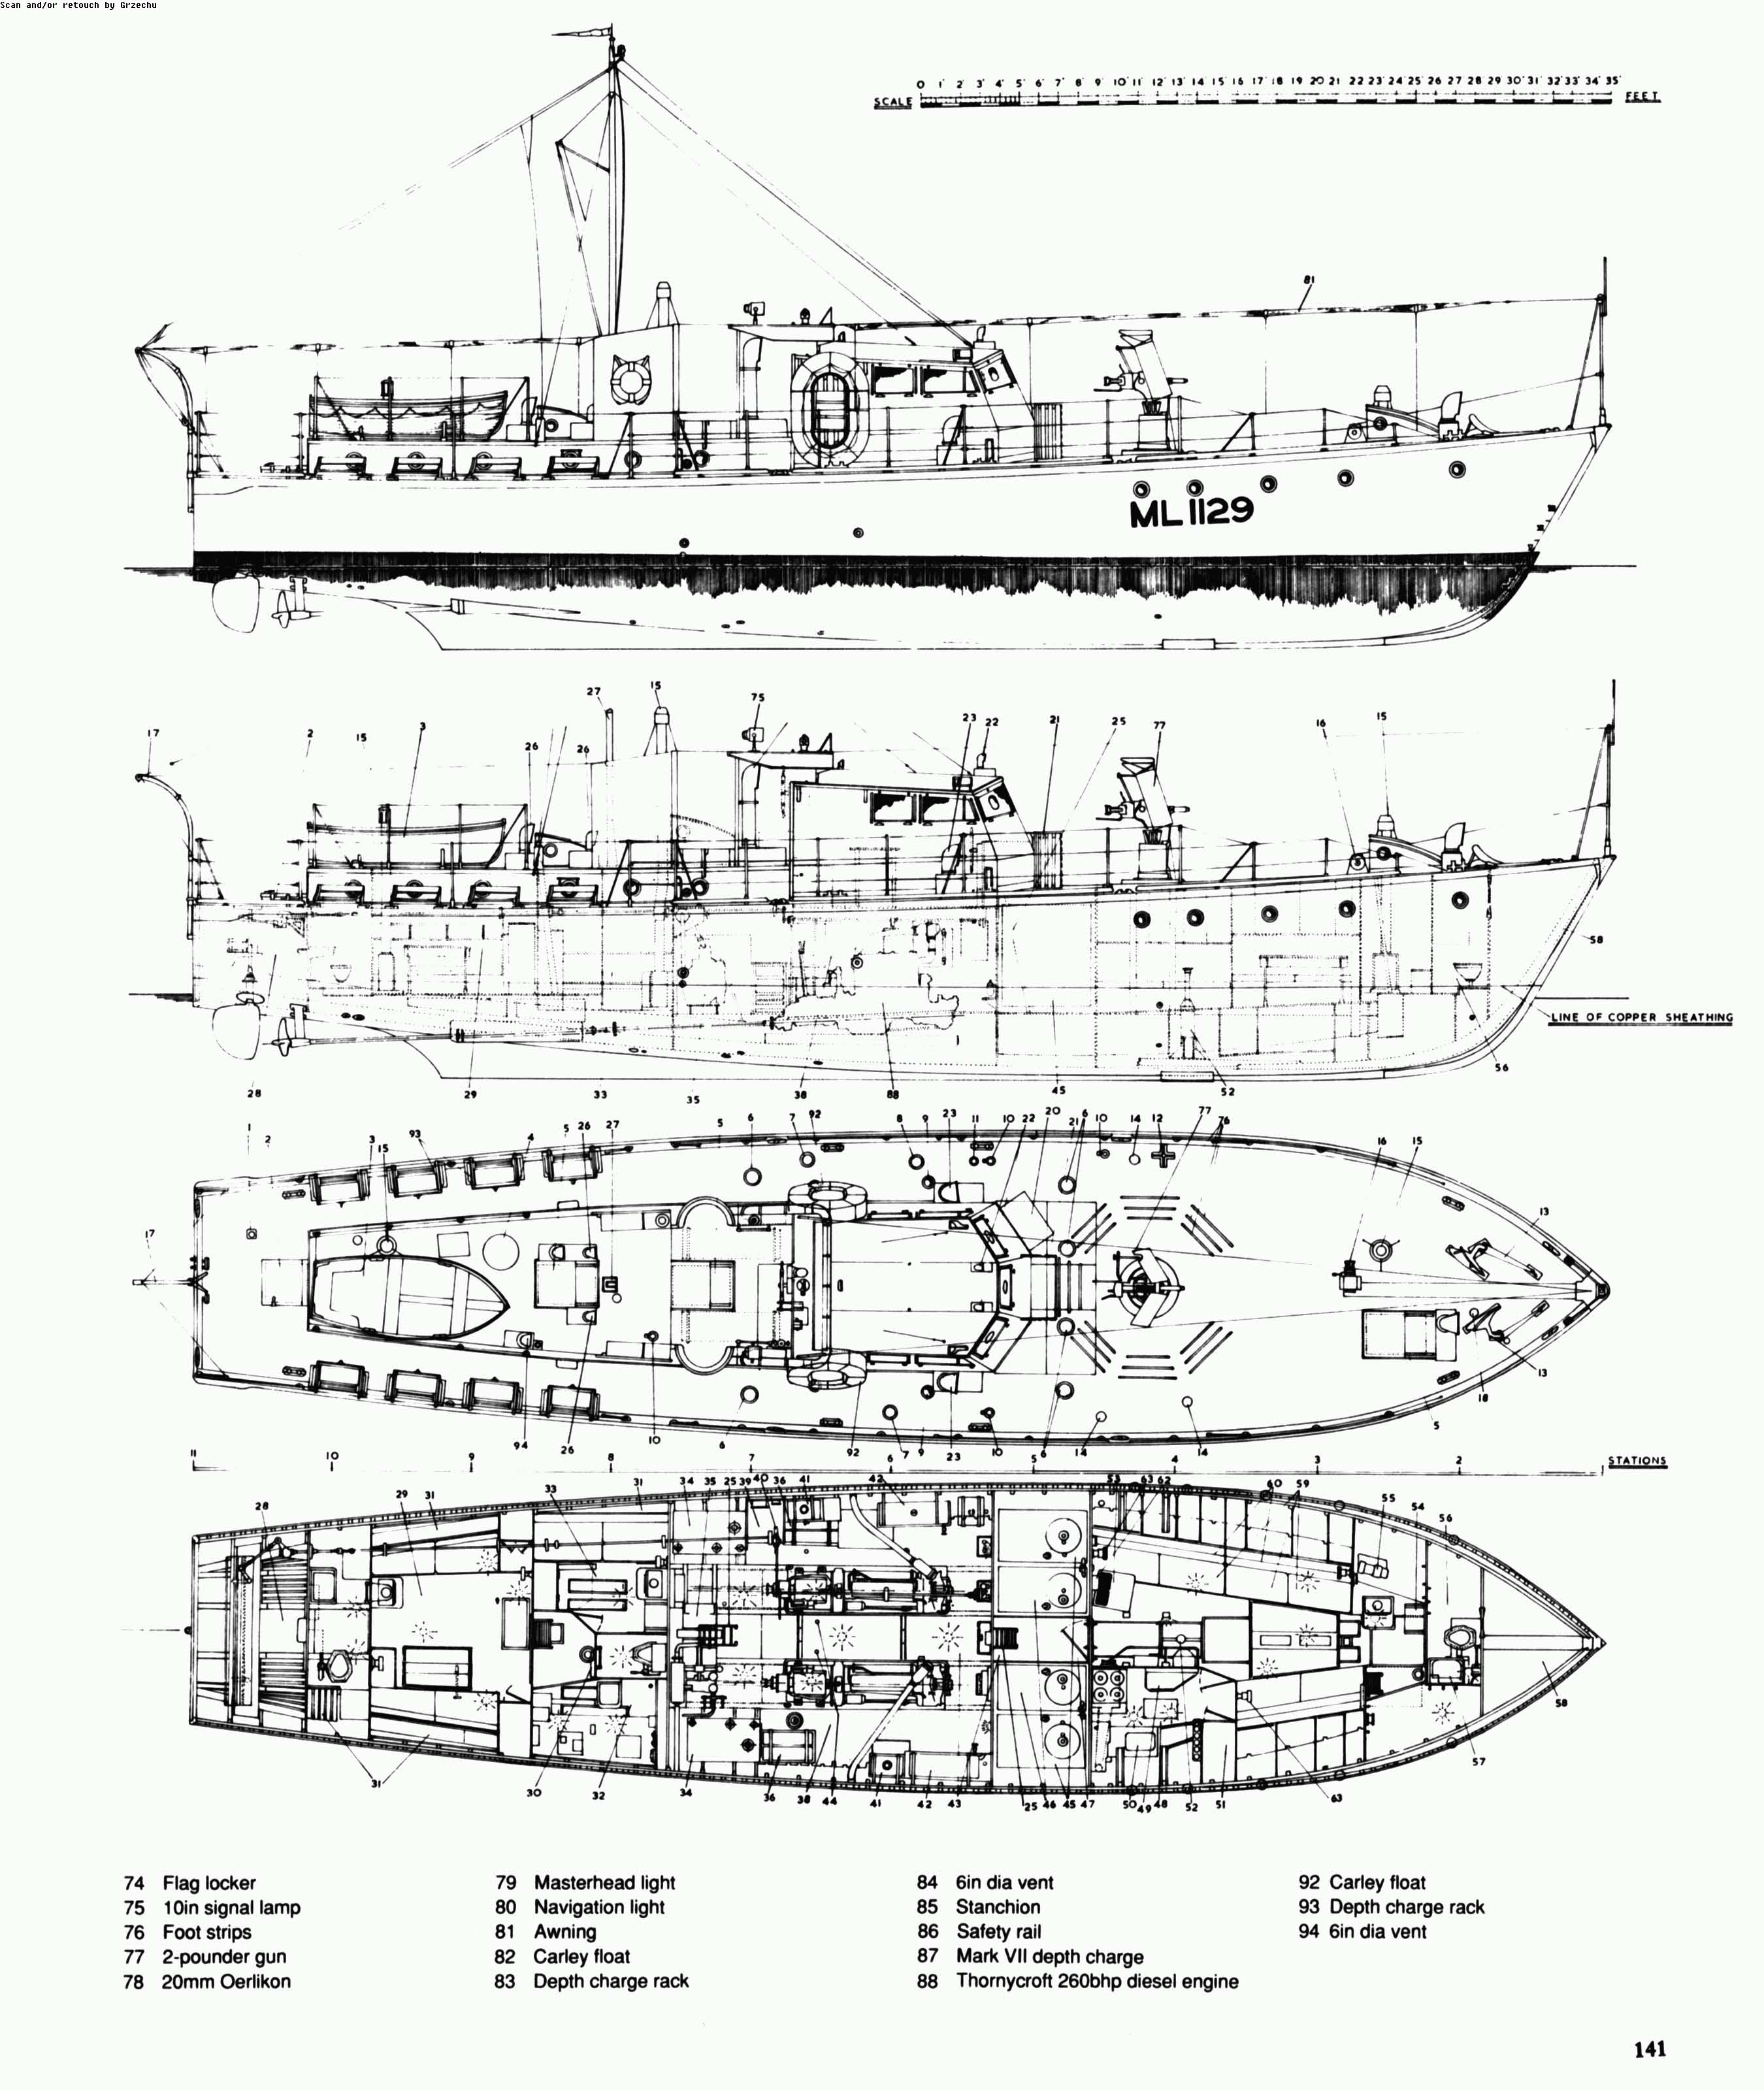 Allied Coastal Forces of World War II (1) Fairmile designs & U.S. submarine chasers_Page_143.jpg